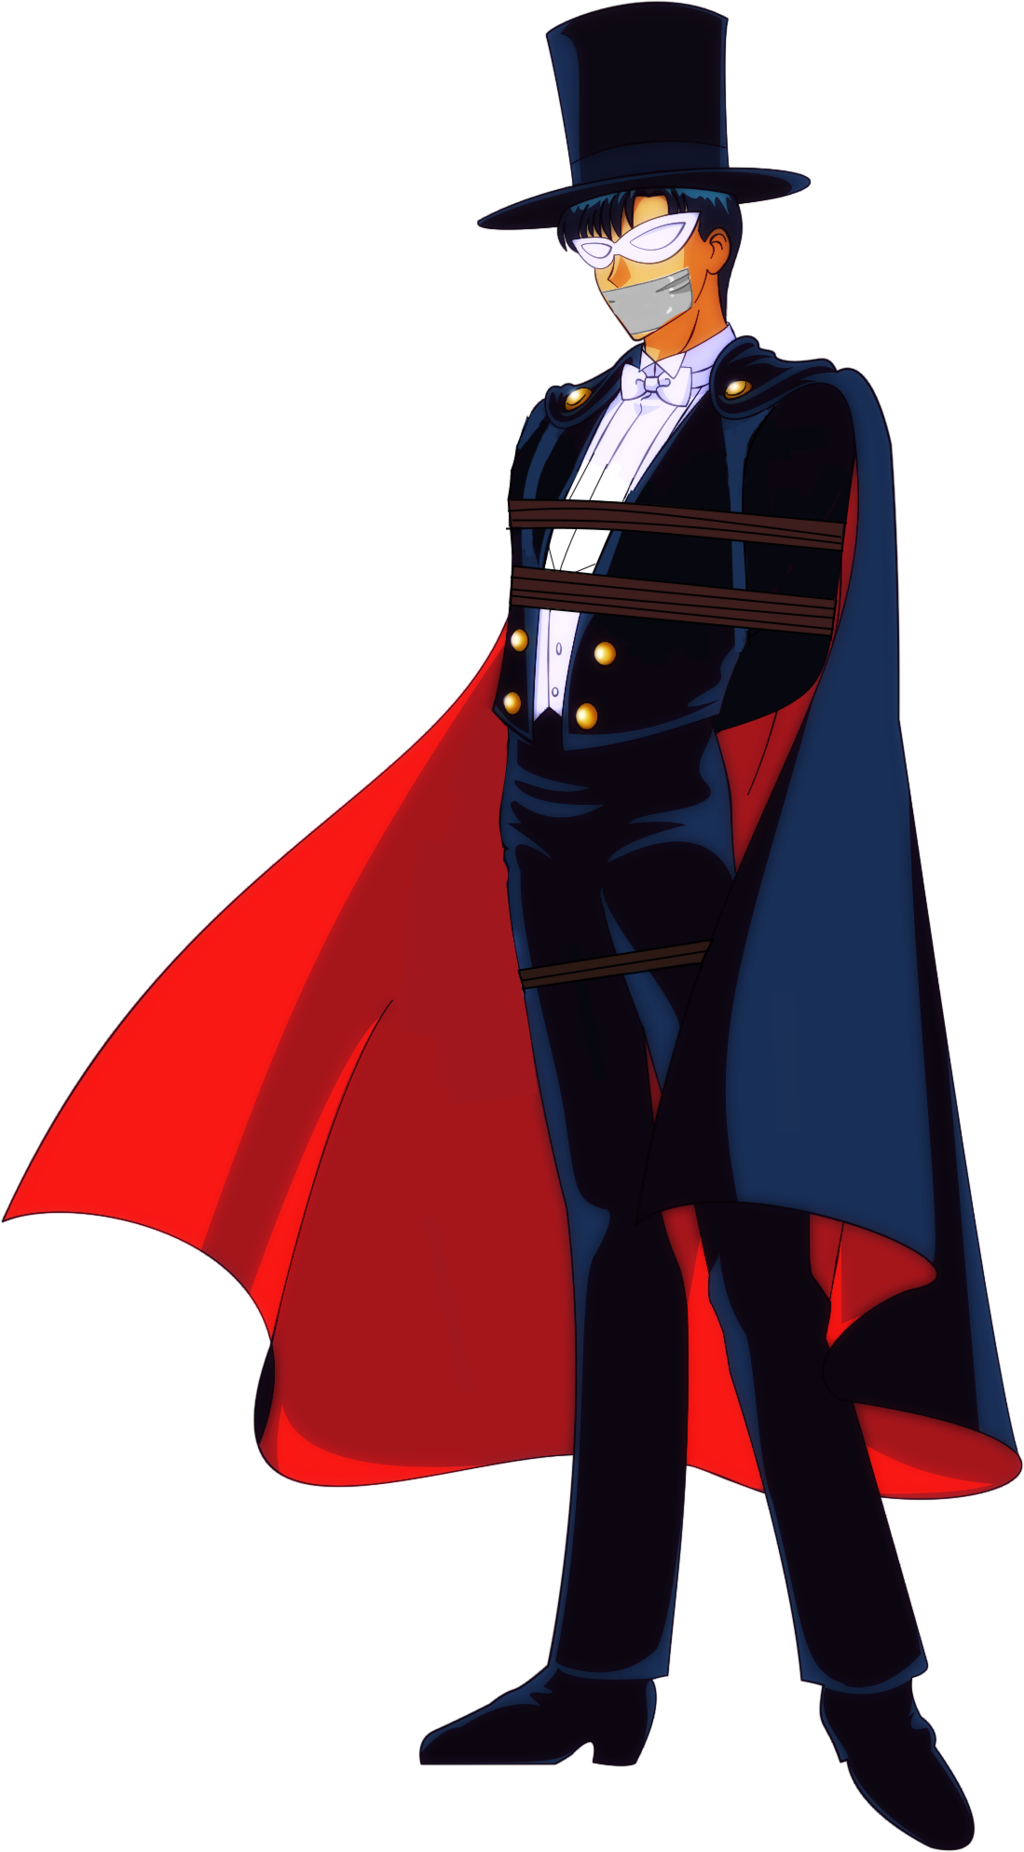 Tuxedo Mask GID by ErnetGID on DeviantArt